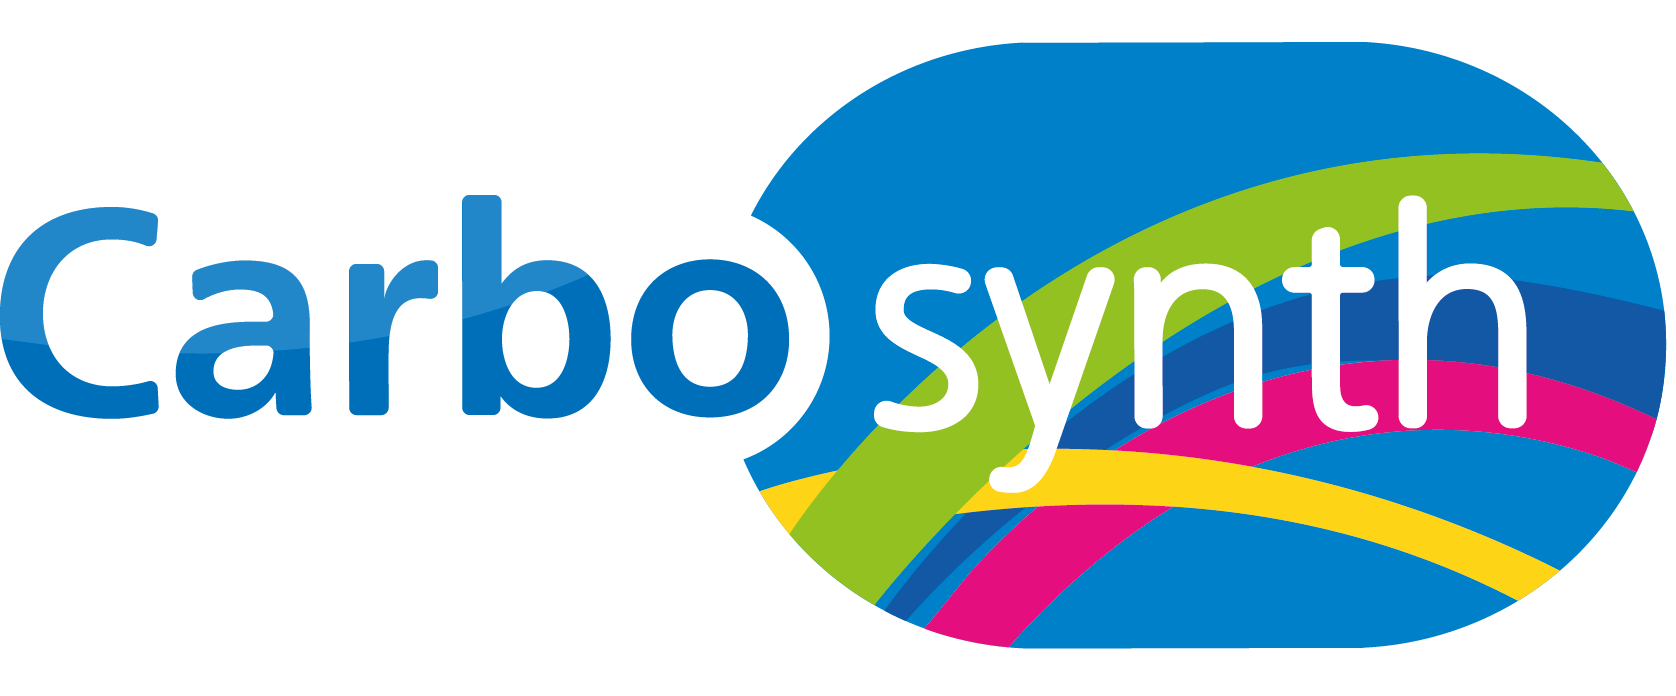 Carbosynth logo